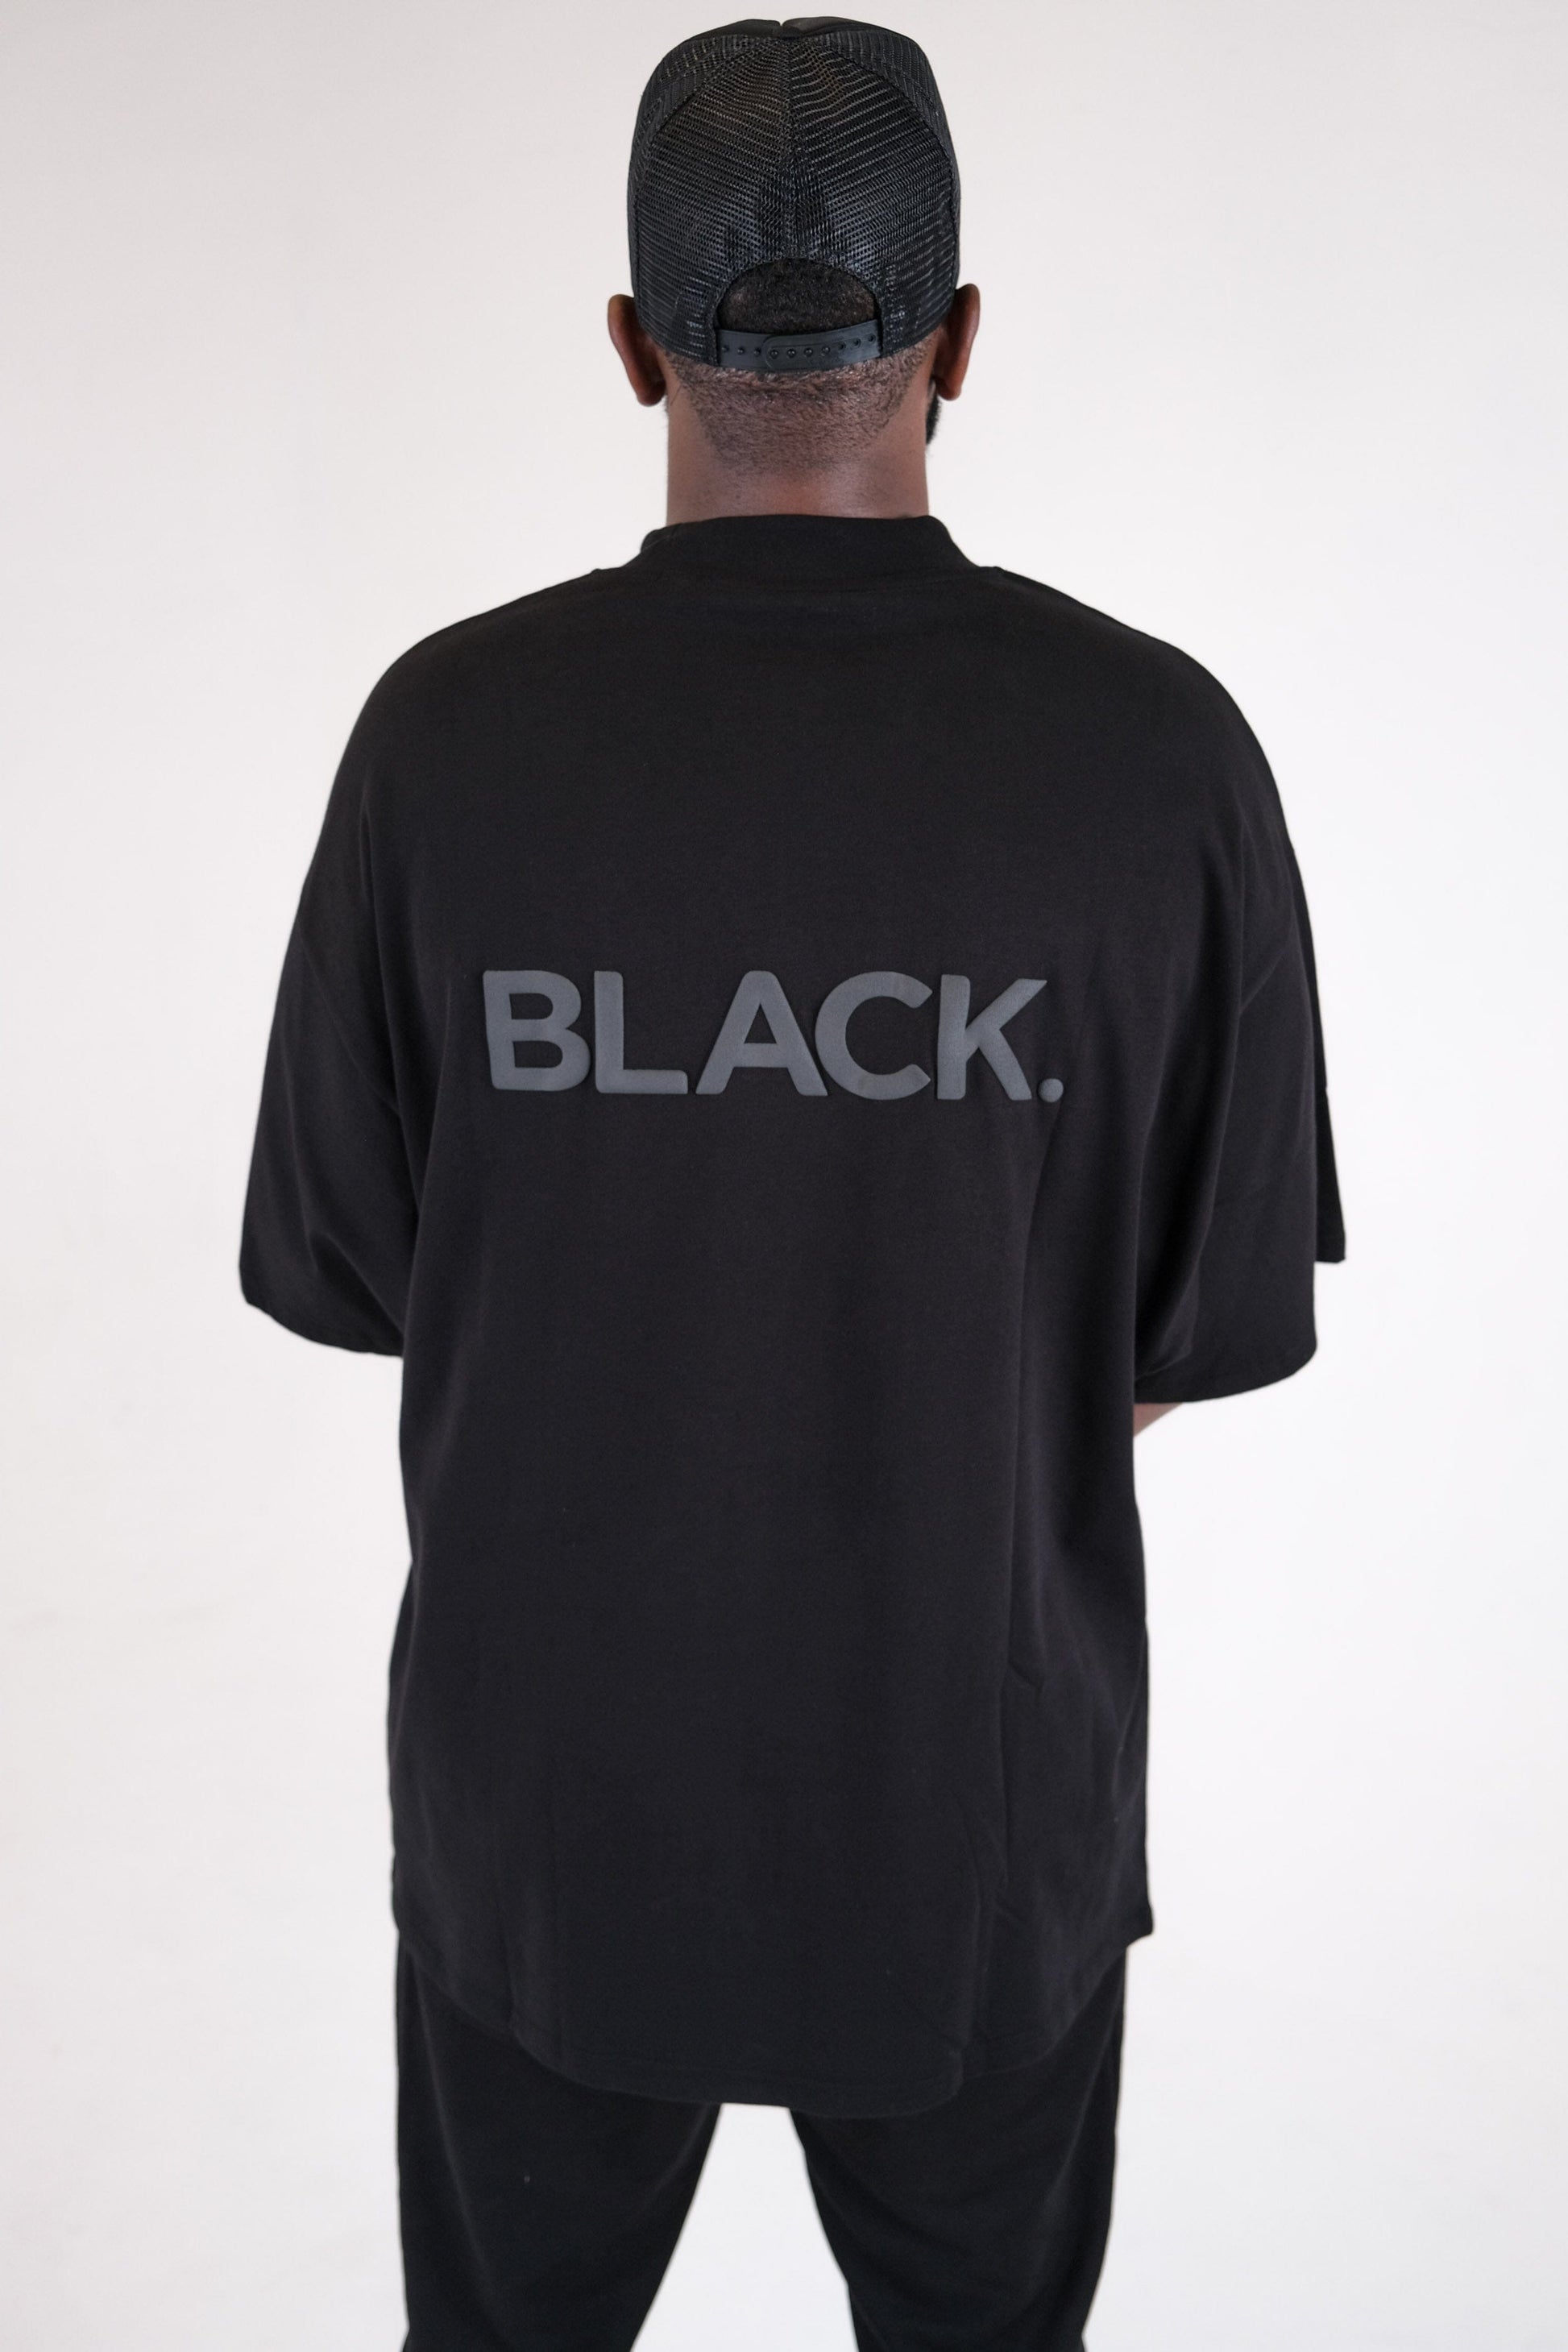 Copy of Black. T-Shirt - BLACK.LACLOTHING